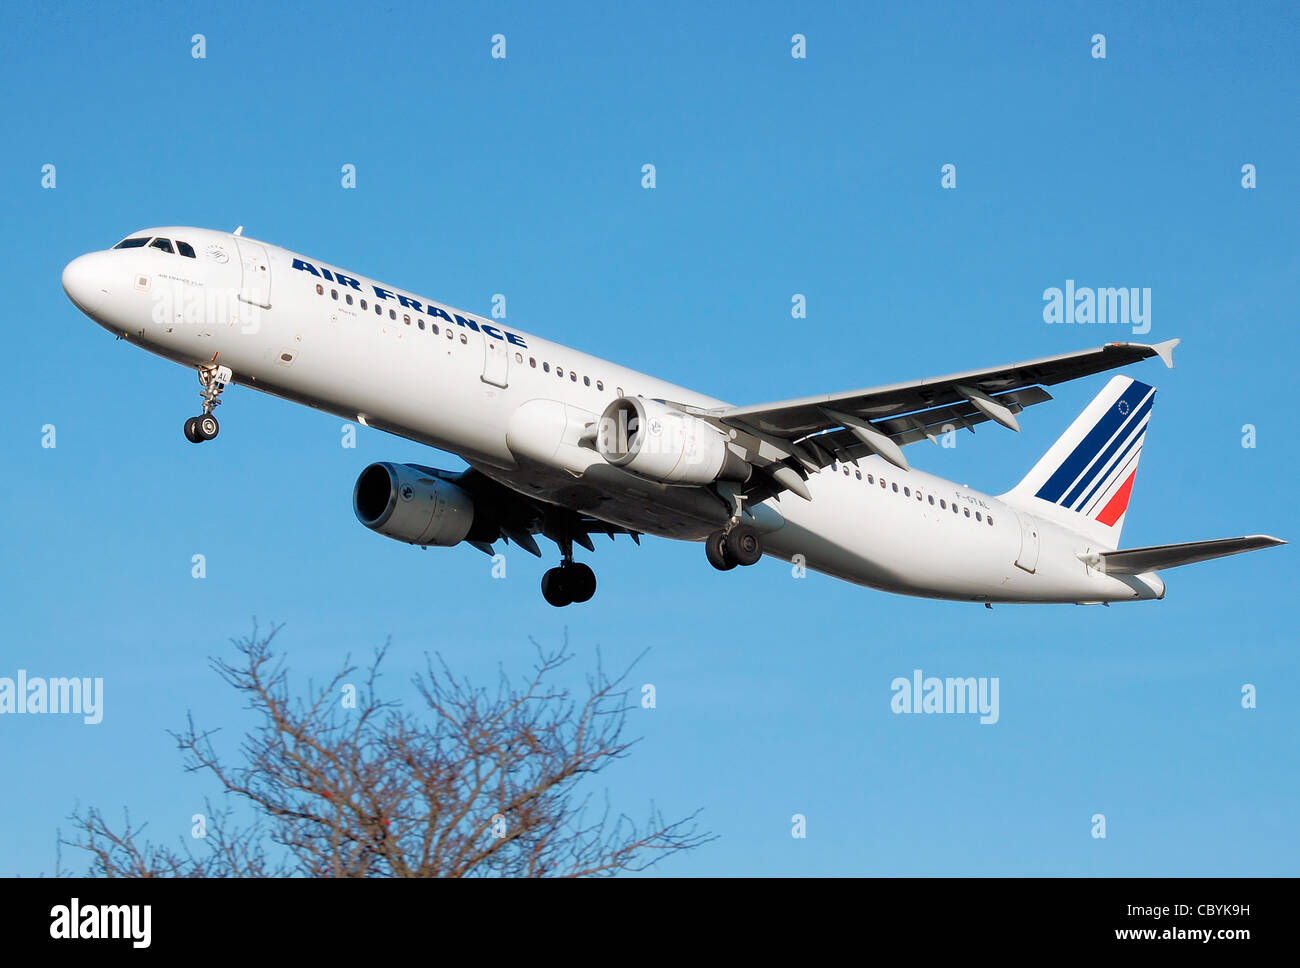 Air France Airbus A321-200 (F-GTAL) lands at London Heathrow Airport, England. Stock Photo